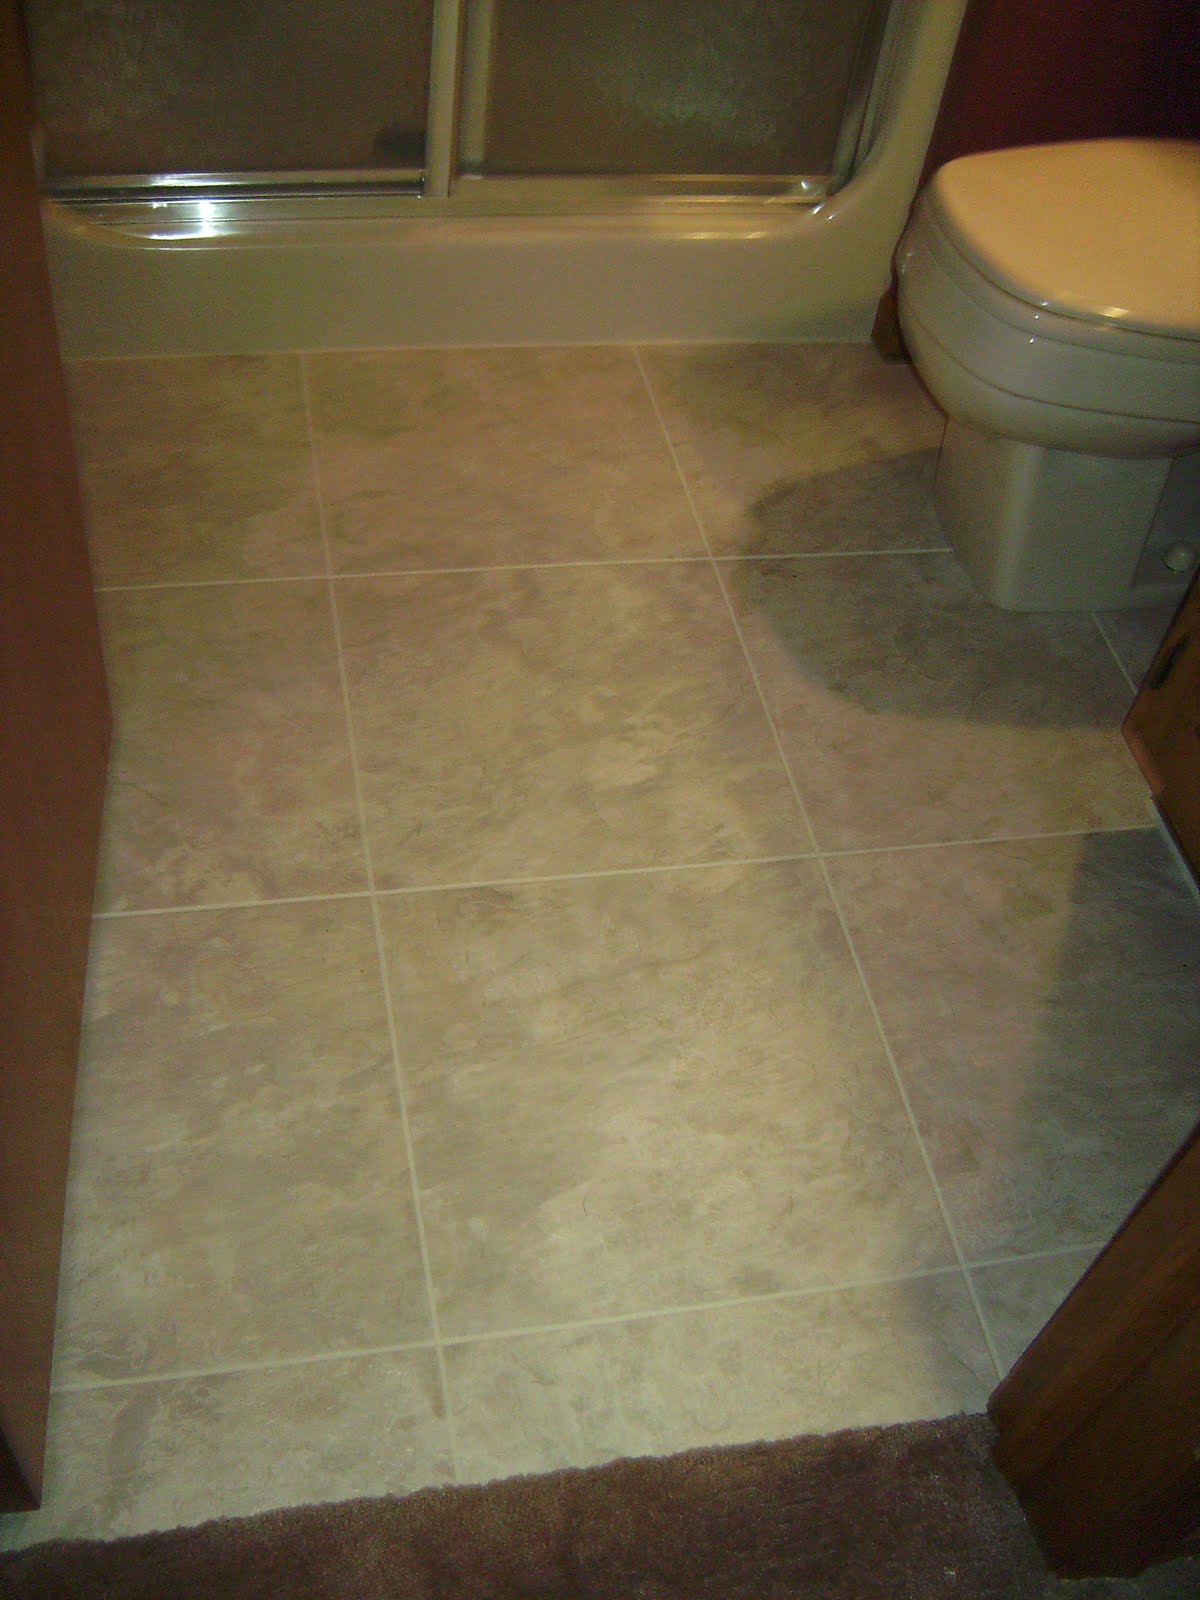 Knapp Tile and Flooring, Inc.: Luxury Vinyl Tile Bathroom ...